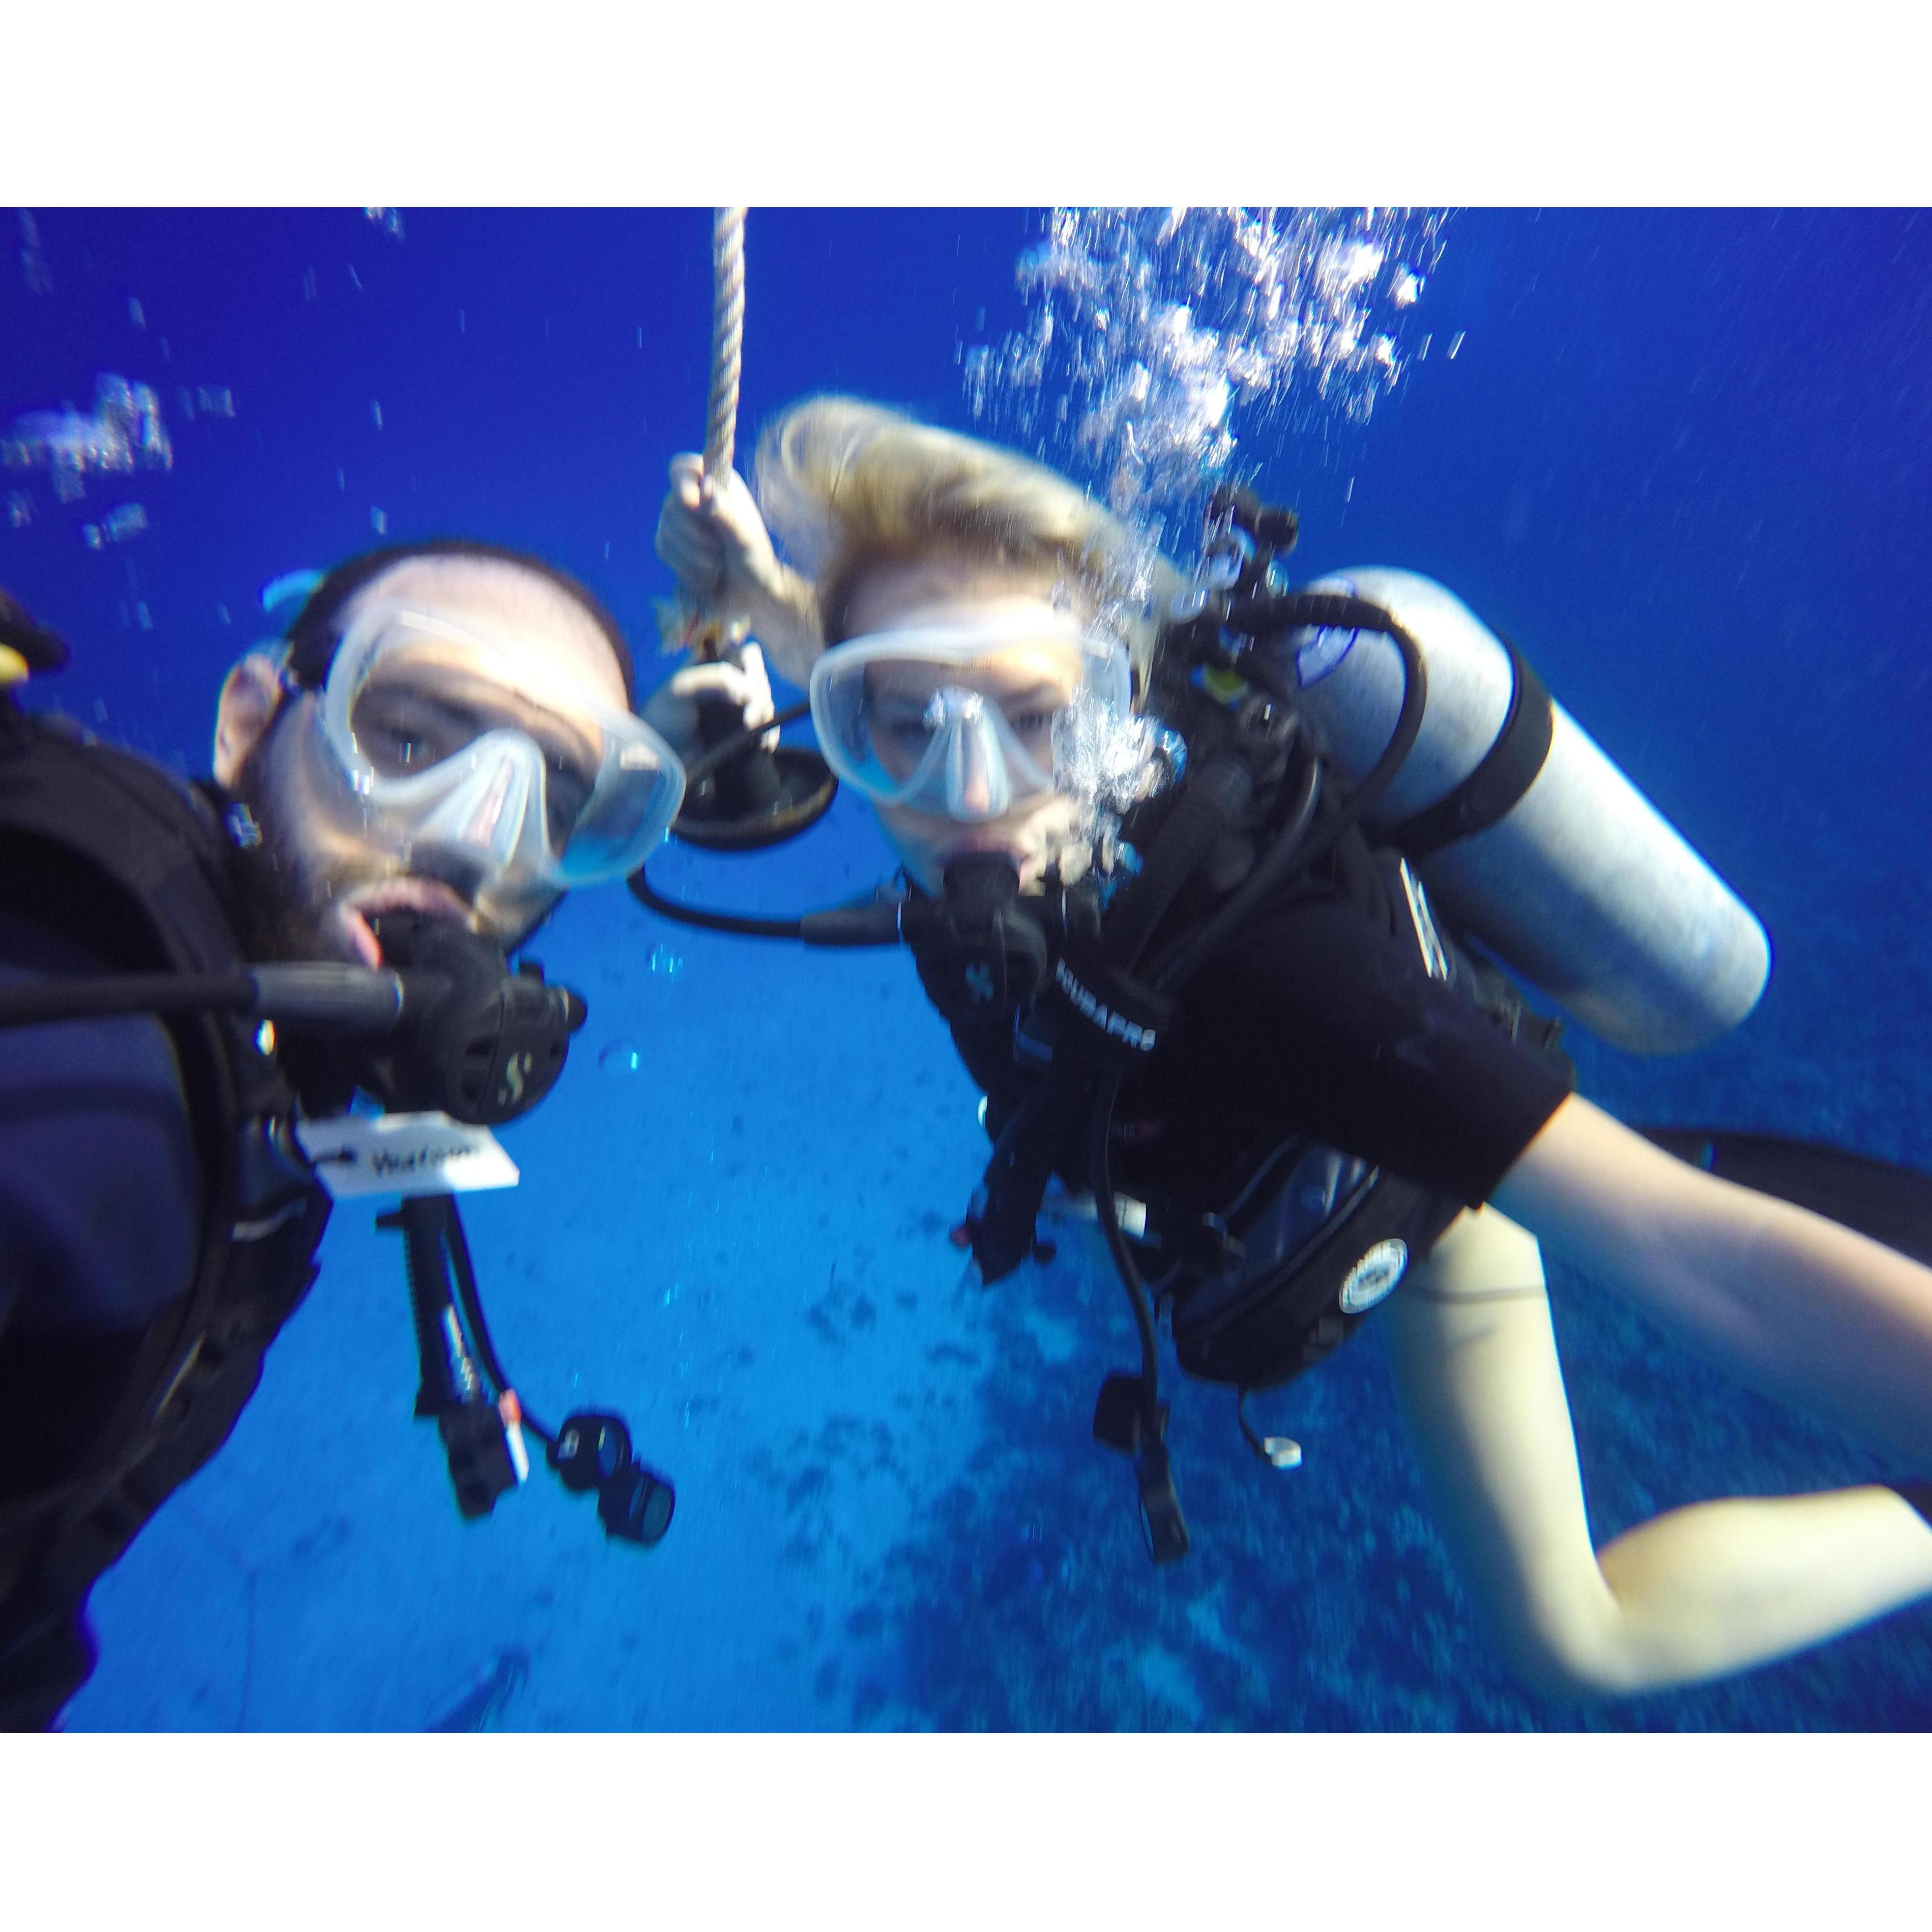 We love scuba diving in Maui!